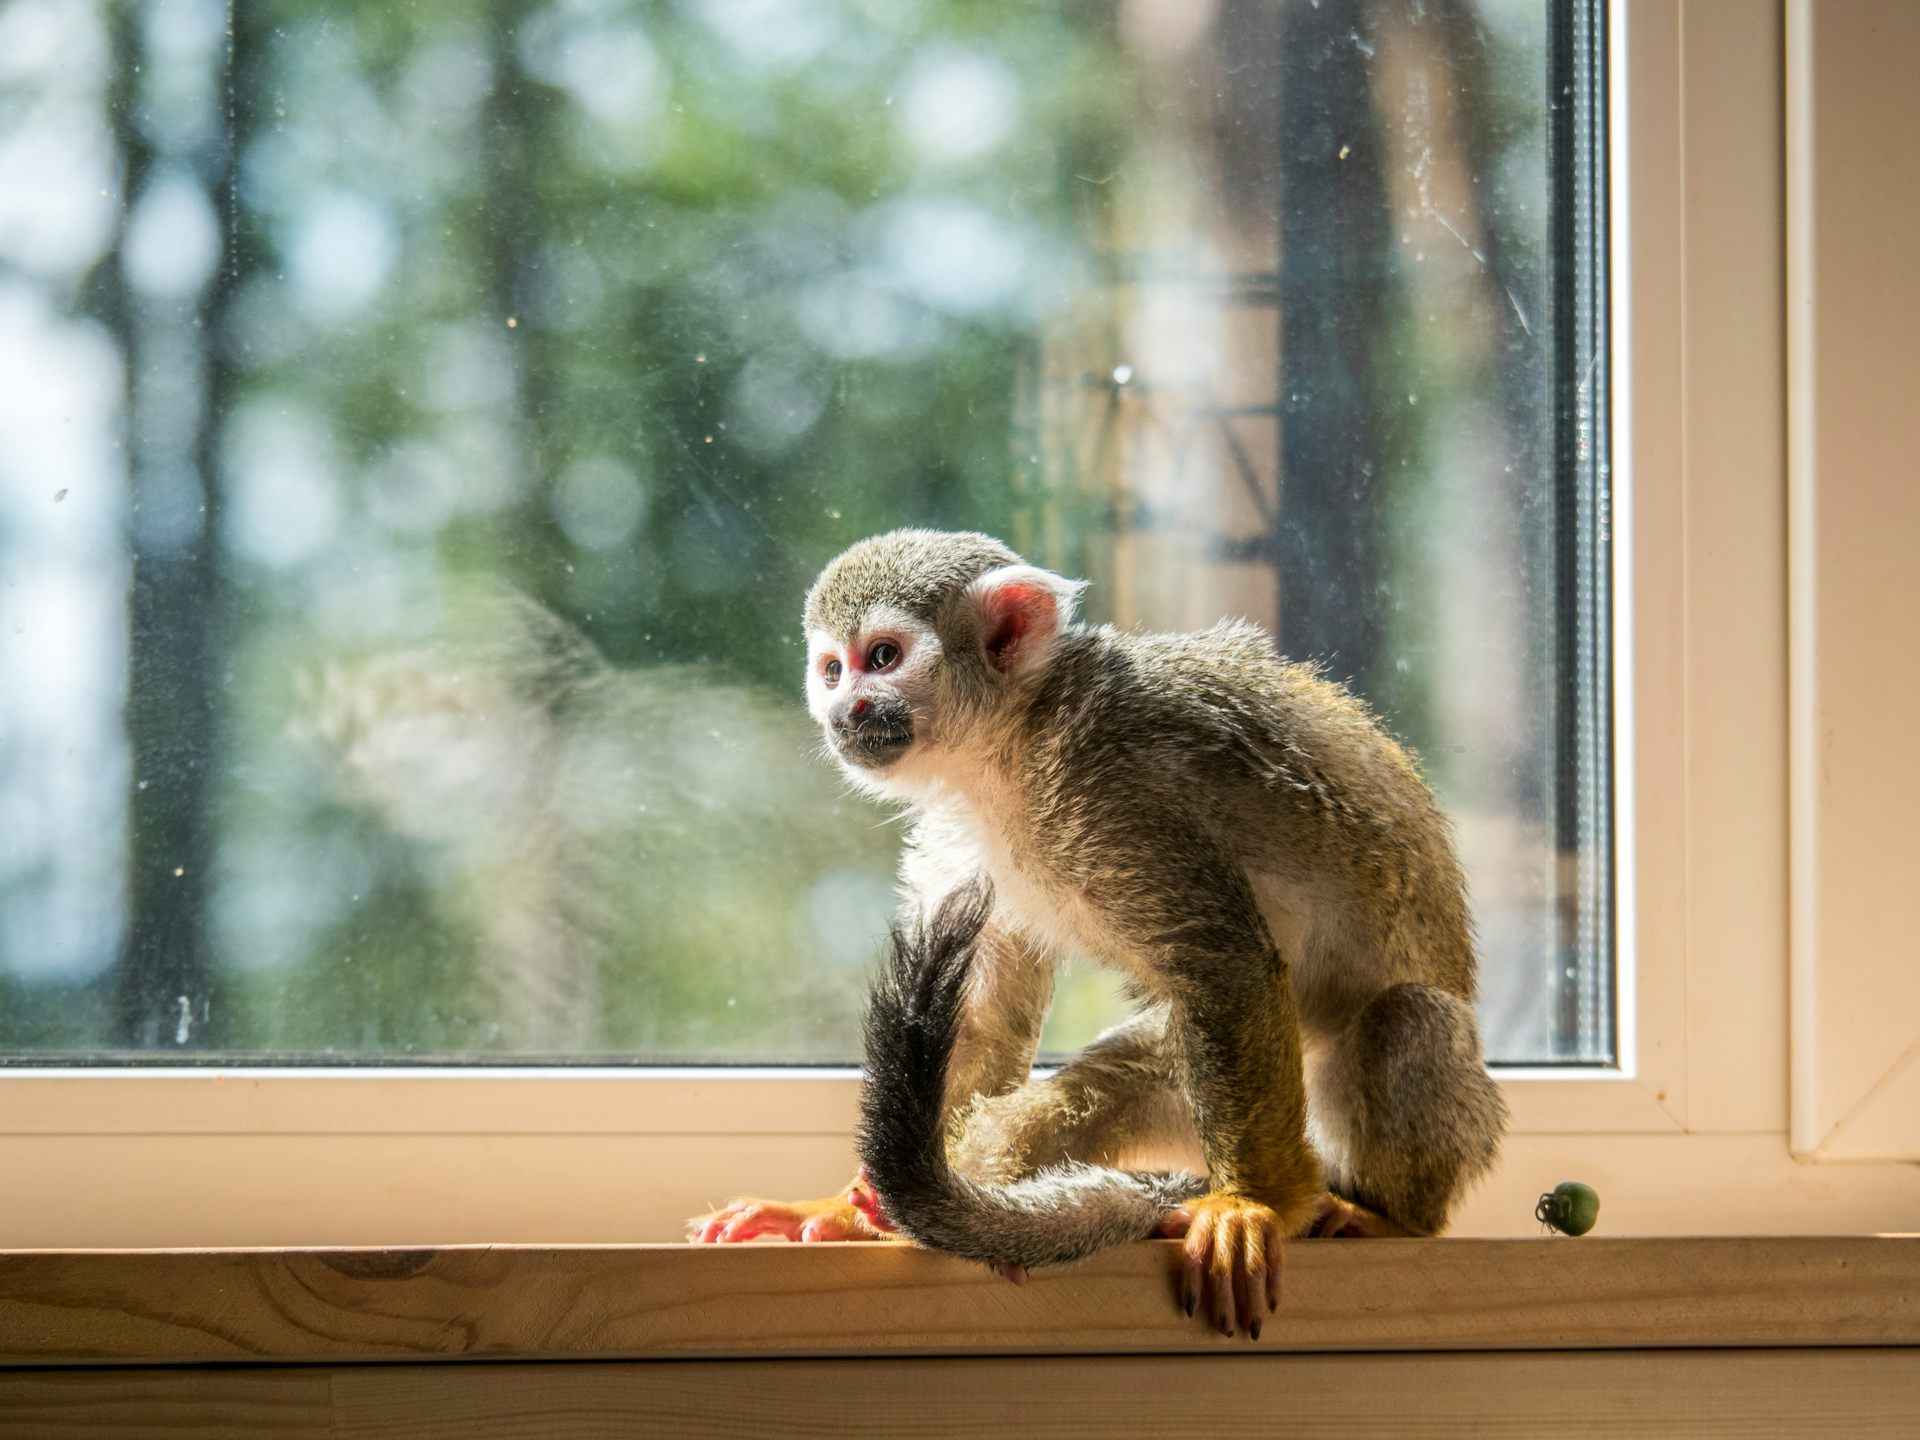 Keeping monkeys as pets is extraordinarily cruel u2013 a ban is long 